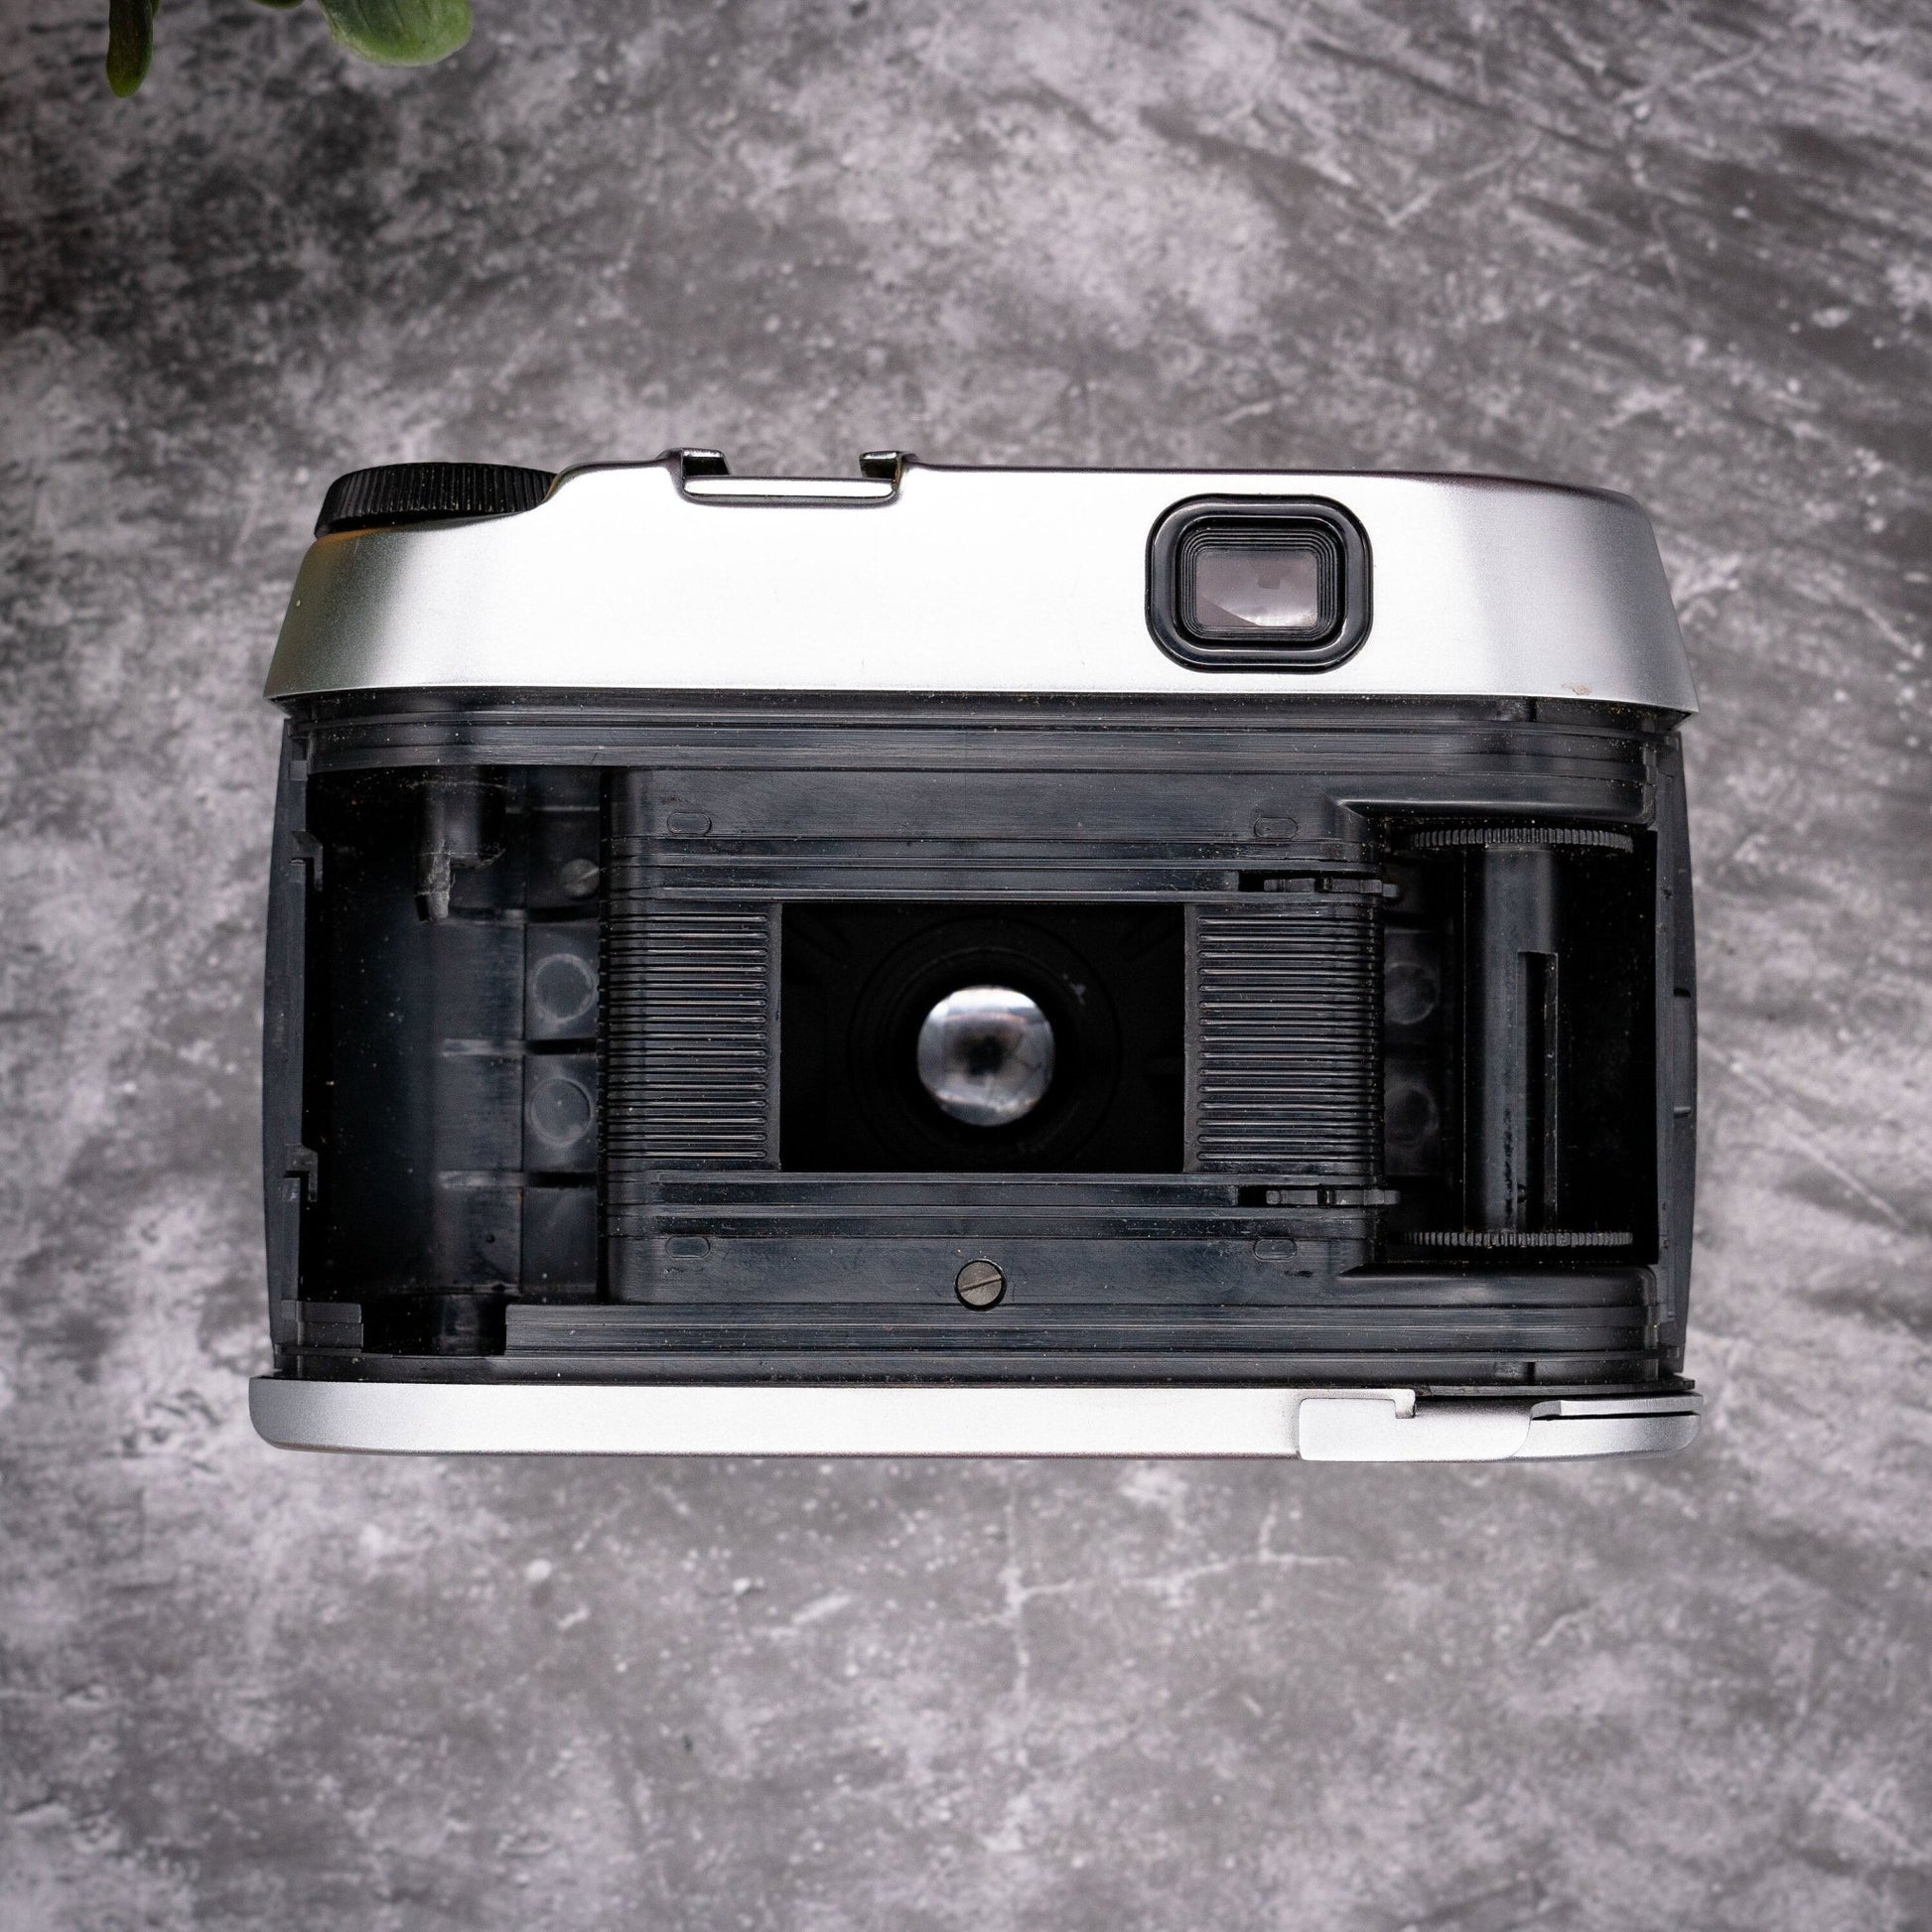 35mm Film Camera Kit | Balda Baldinette ii + Roll Of Expired Film - Expired Film Club